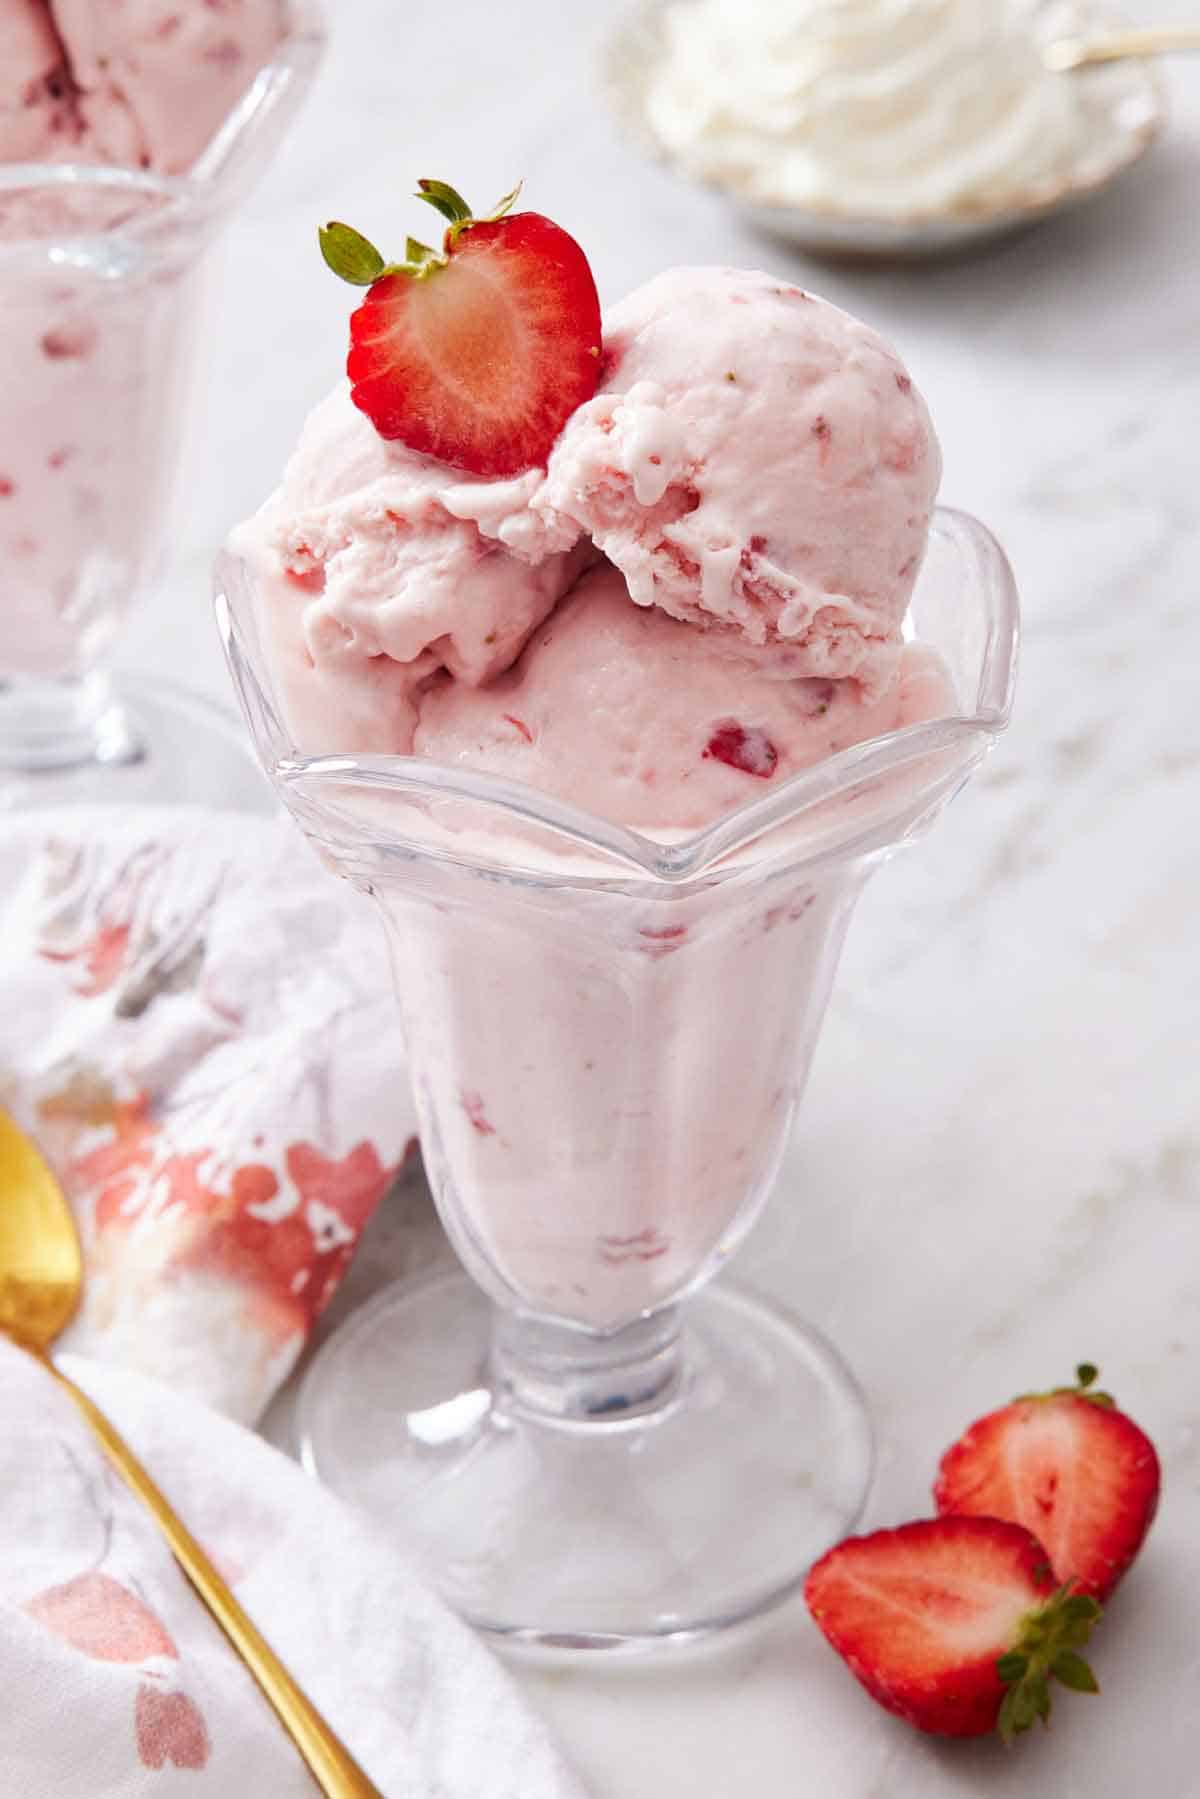 A sundae glass with strawberry ice cream topped with cut a strawberry. More strawberries beside it.